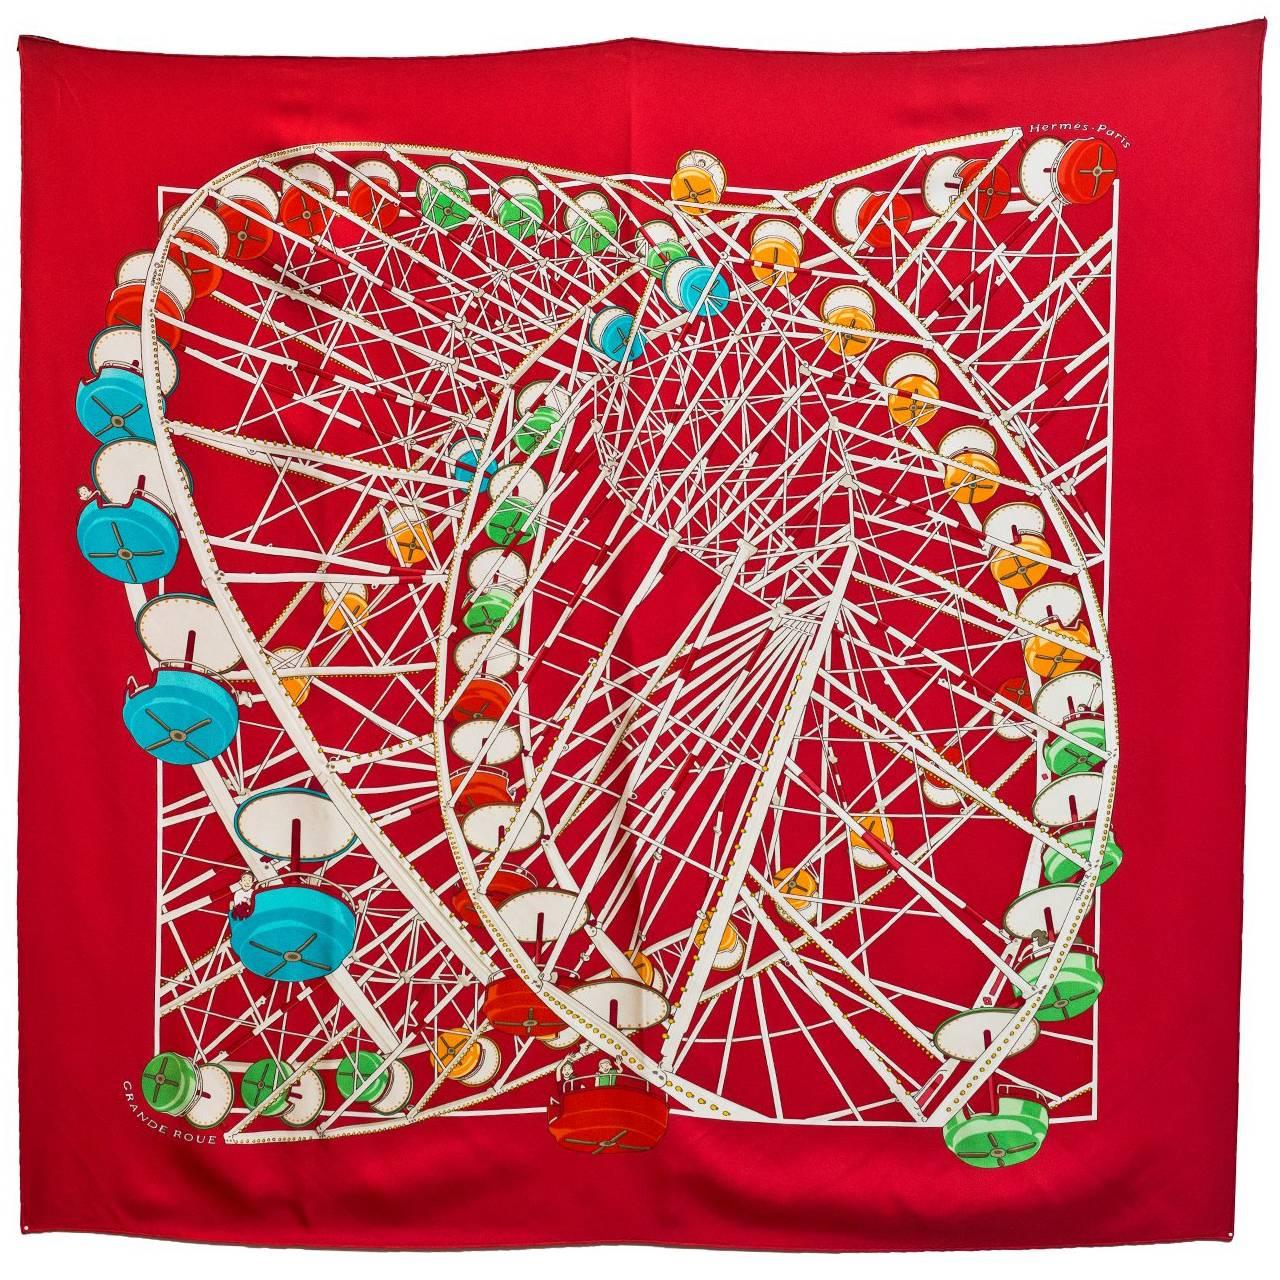 Hermes Red White and Blue Grand Roue Ferris Wheel 90cm Silk Scarf